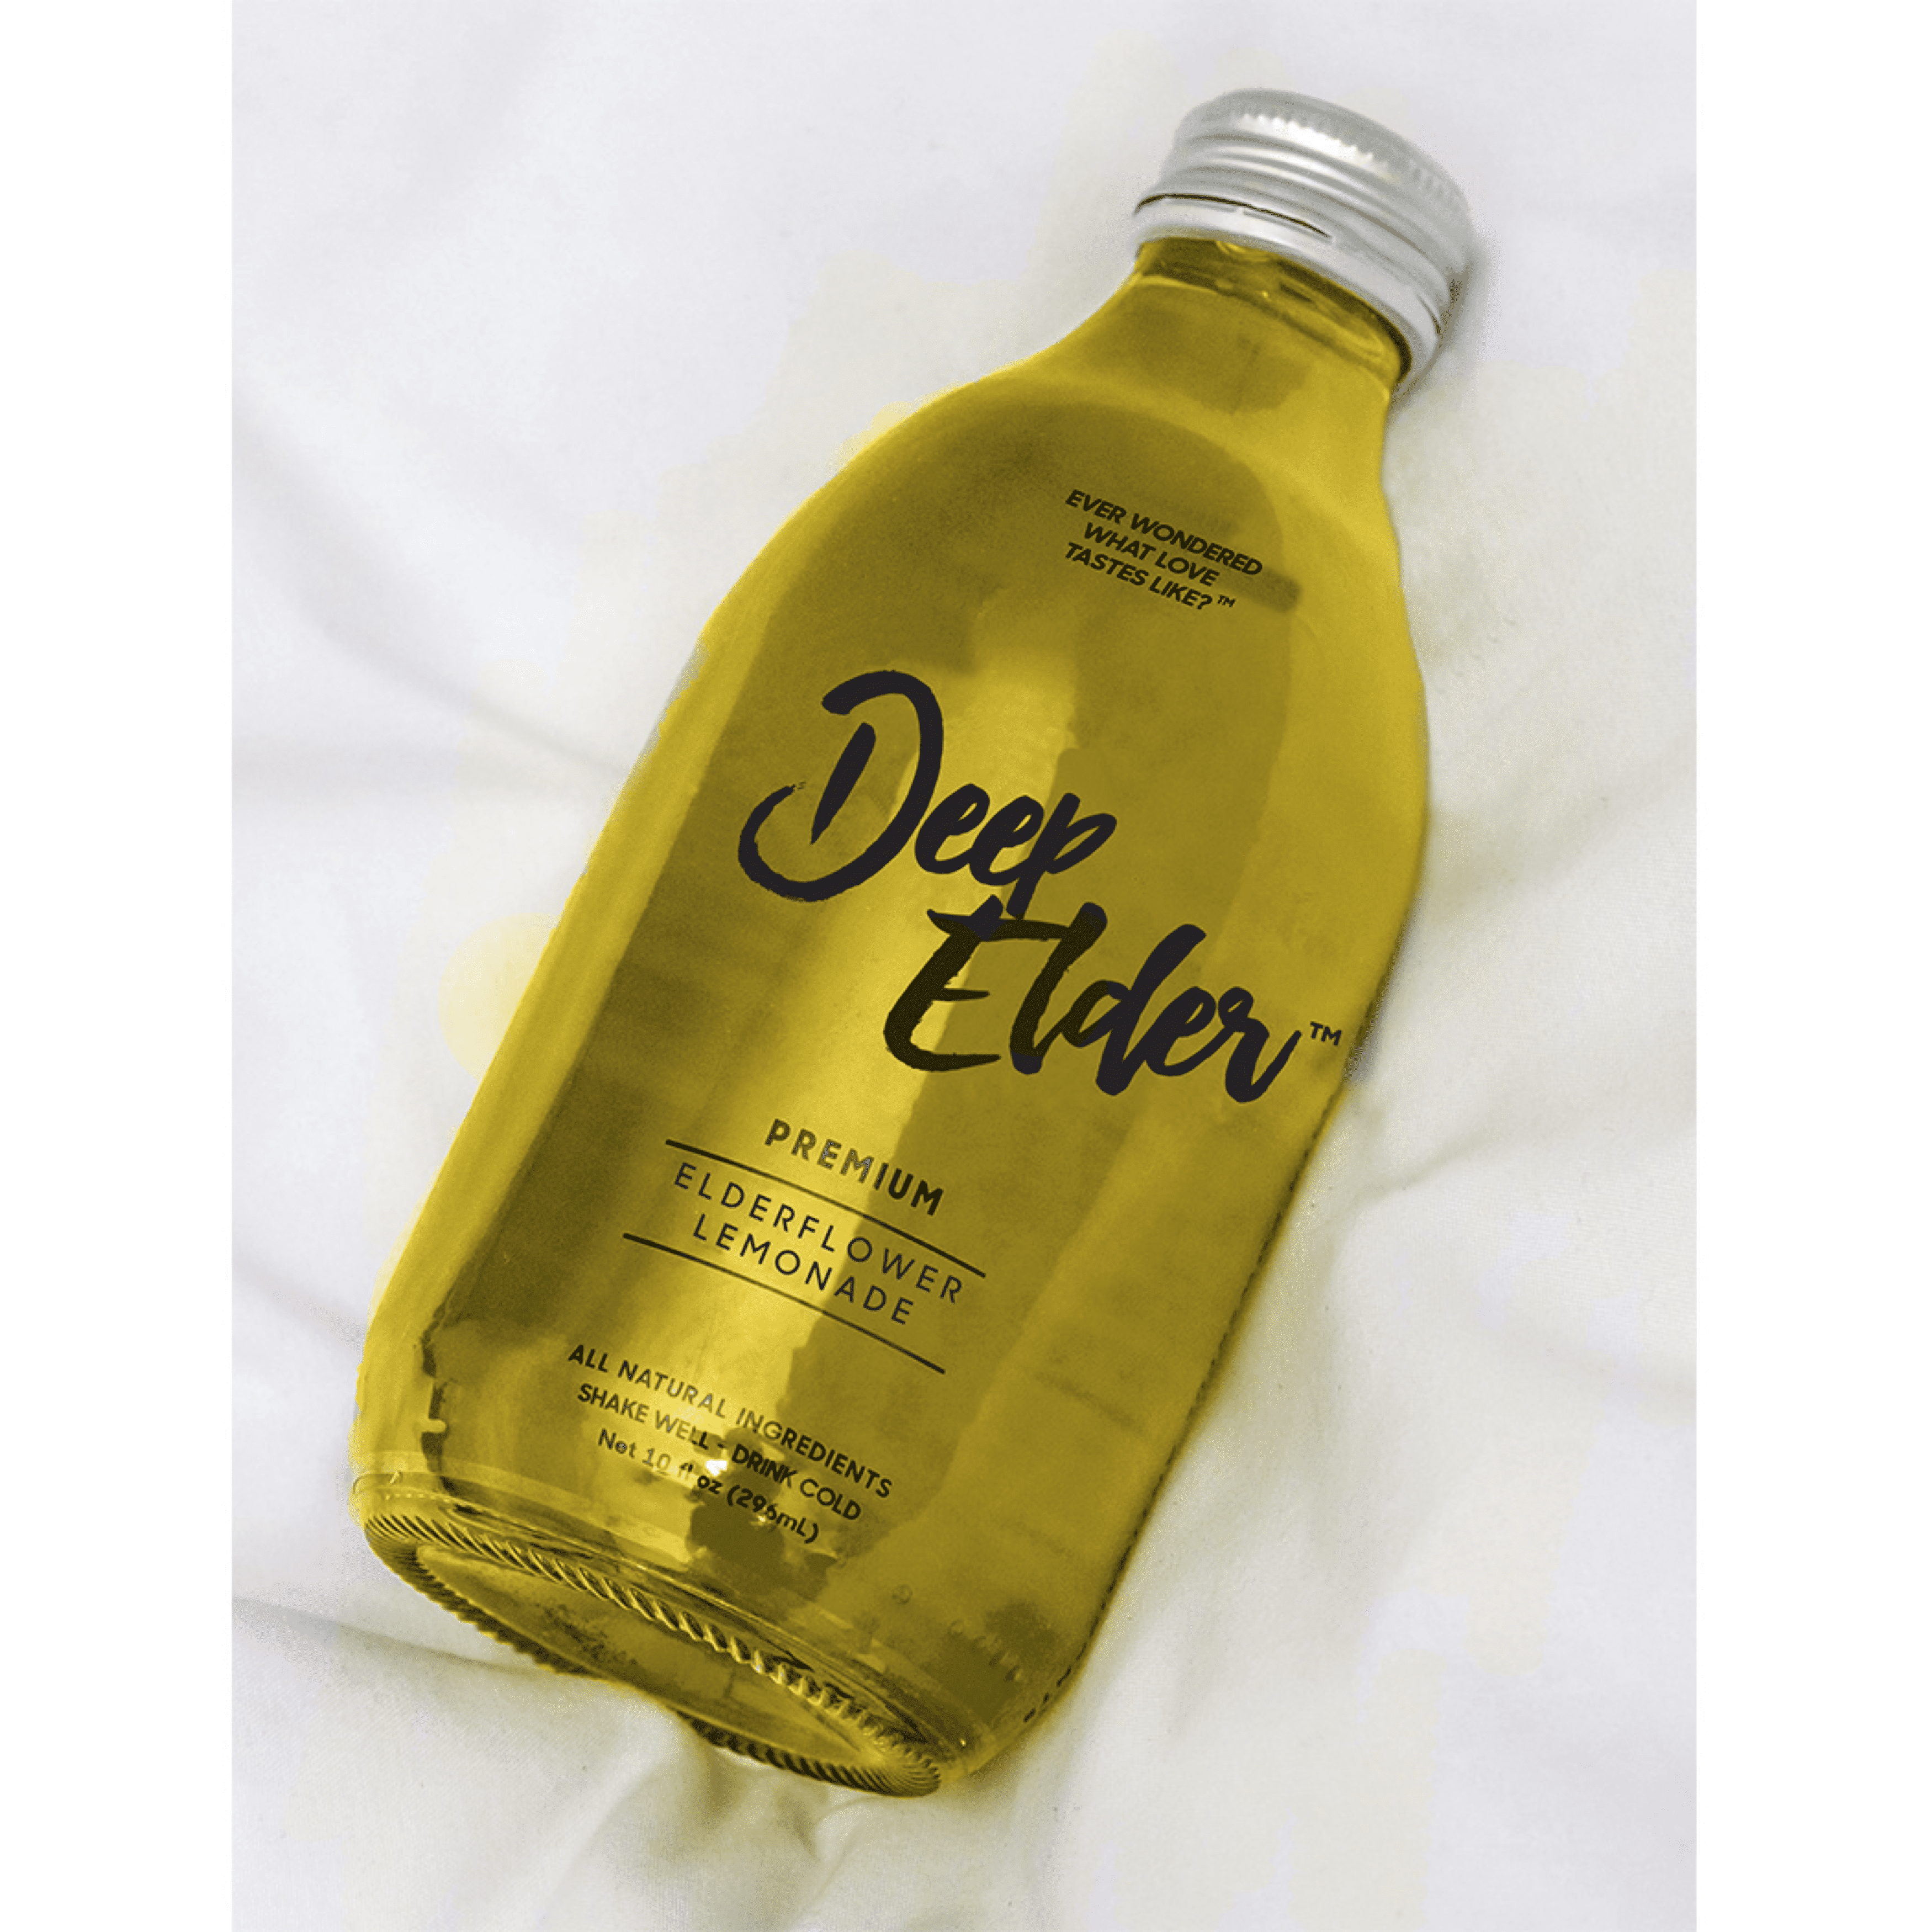 Deep Elder -Premium Elderflower Lemonade-  12 units per case 10.0 oz